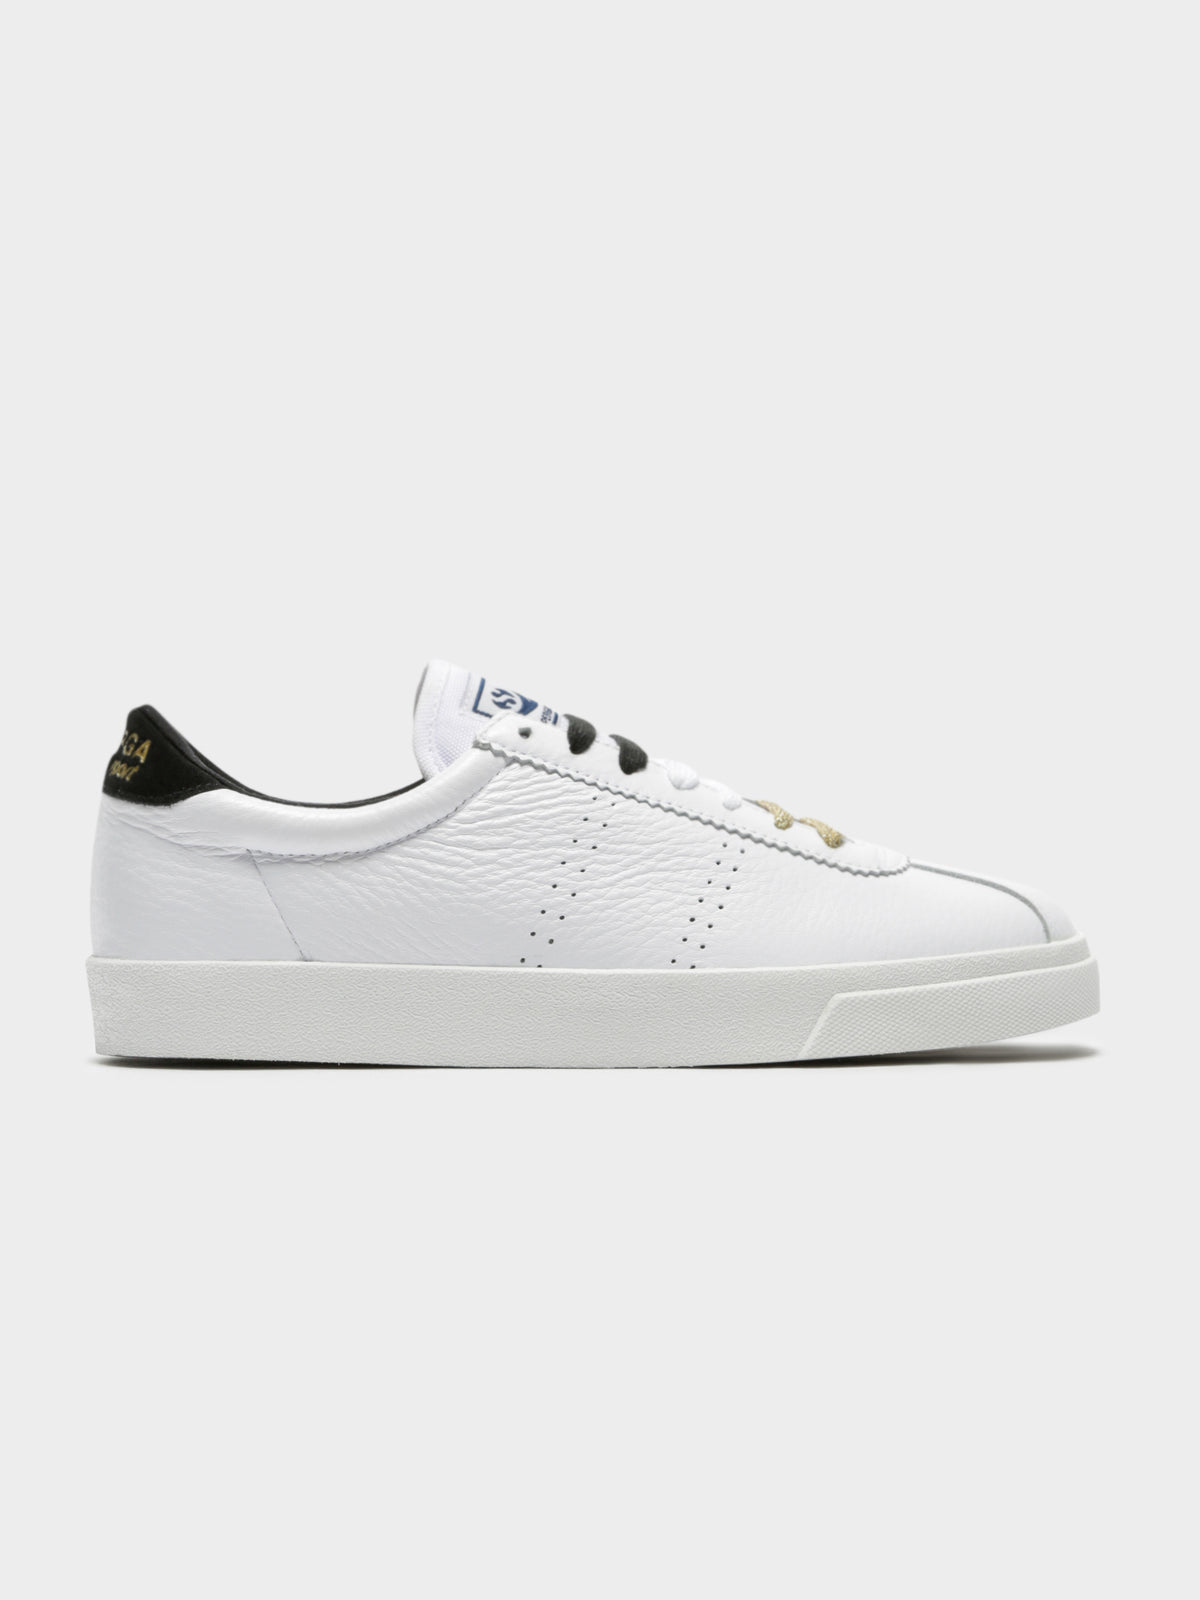 Unisex 2843 Clubs Comfleasueu Sneakers in White &amp; Black